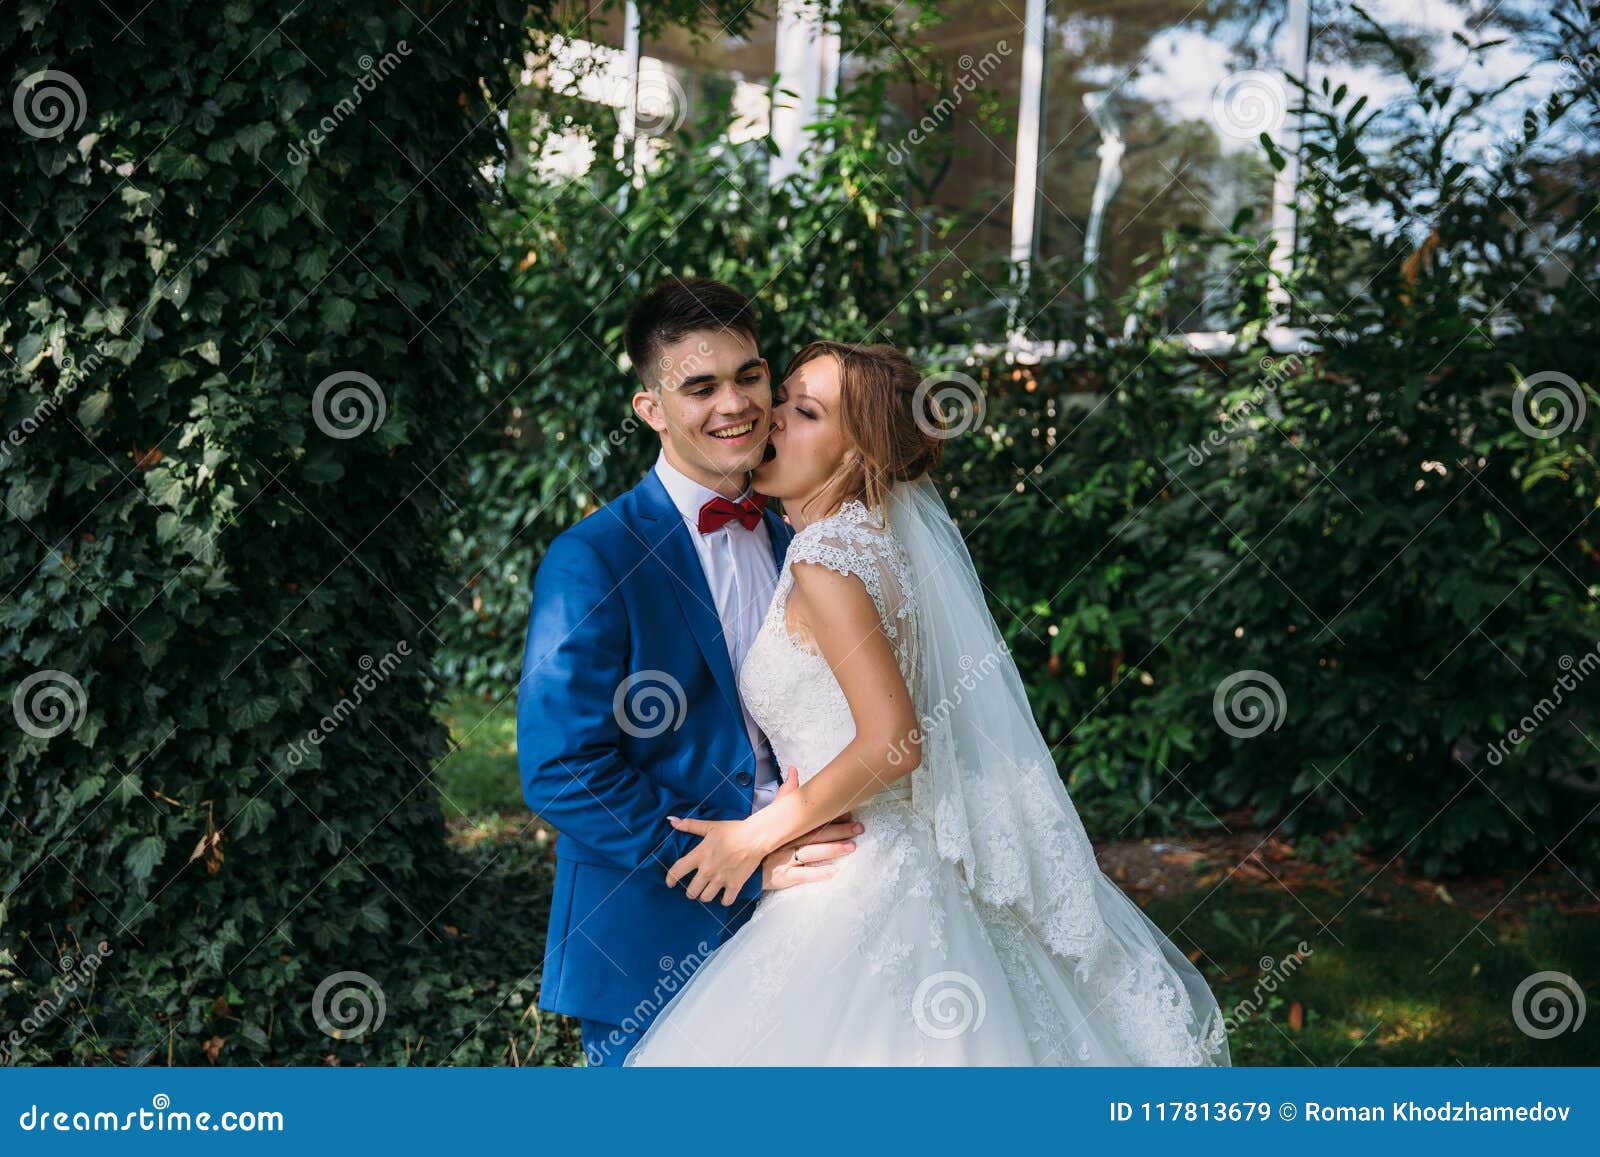 bride beautiful white dress jokes bites groom cheek guy will sweep newlyweds happy their wedding day 117813679